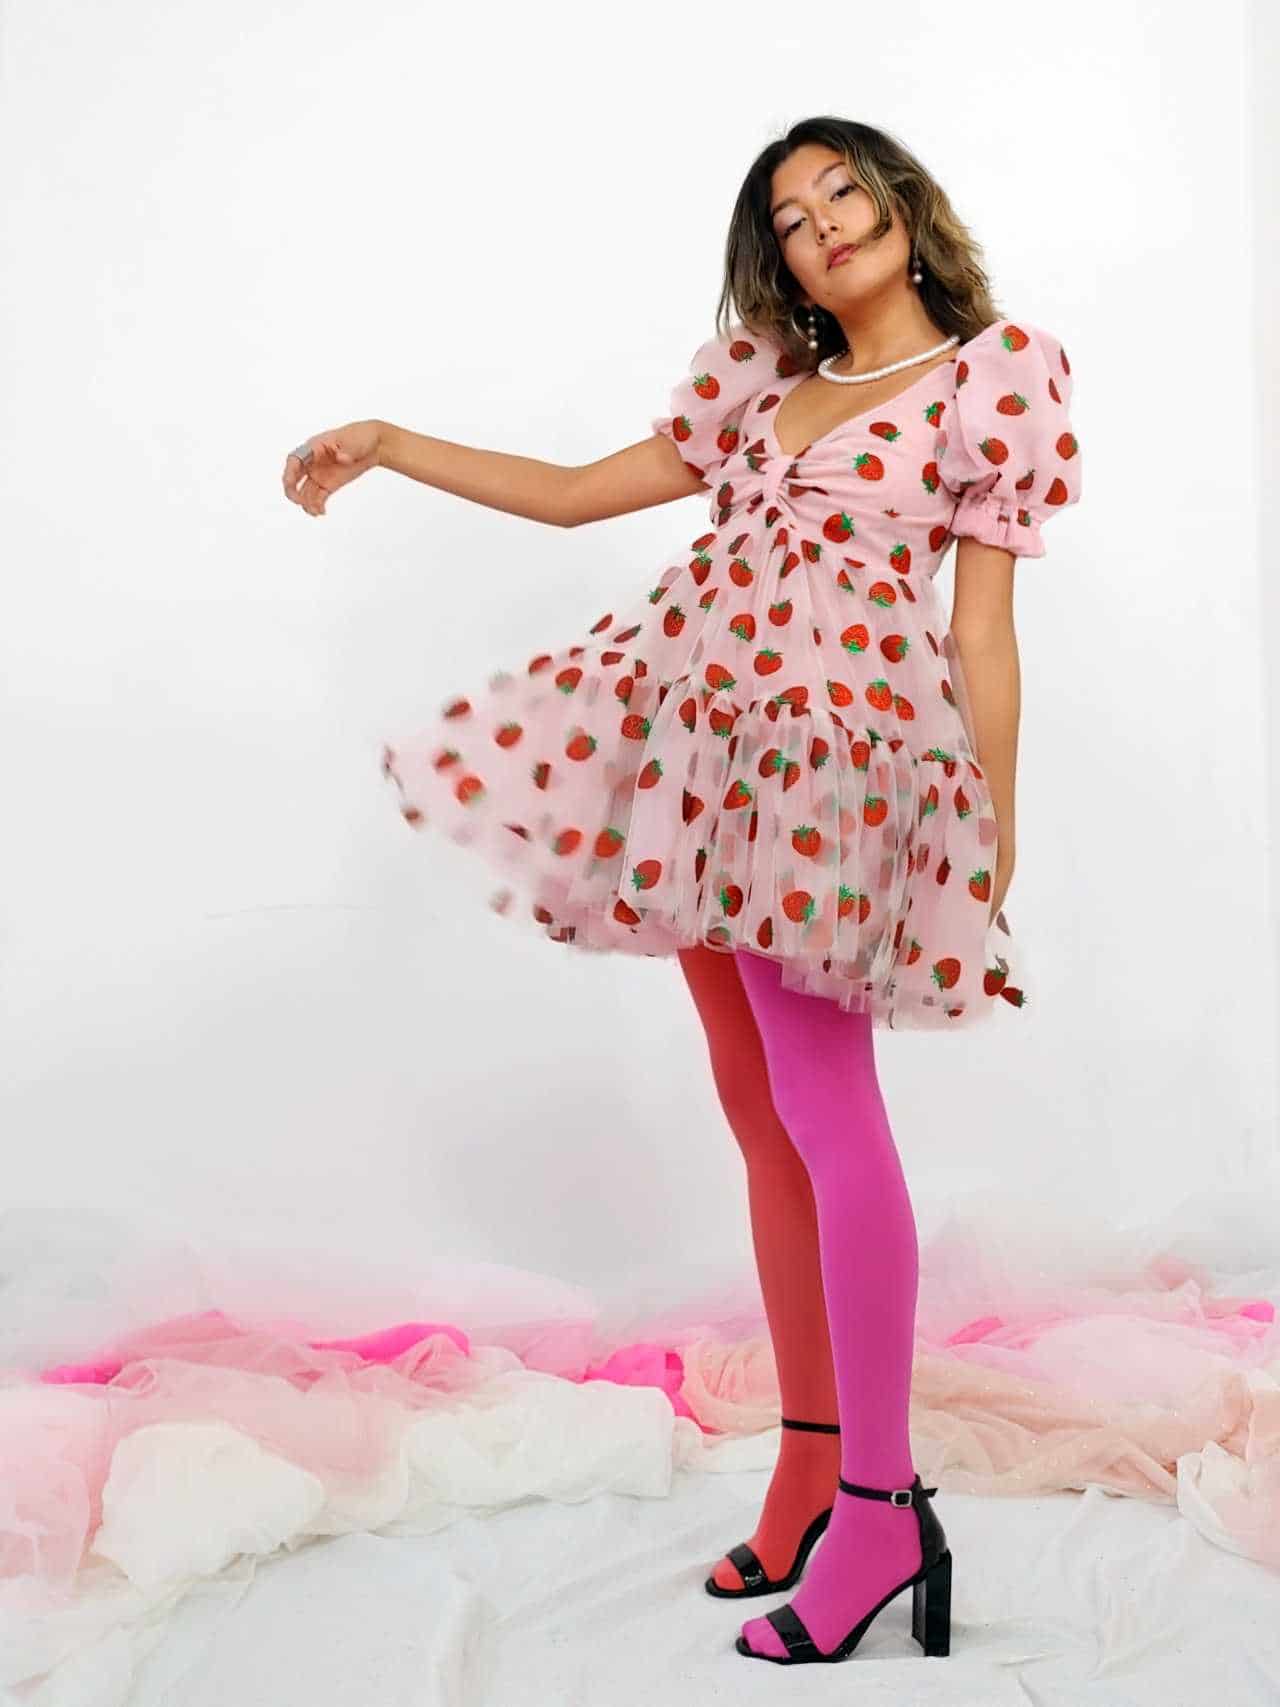 strawberry print dress